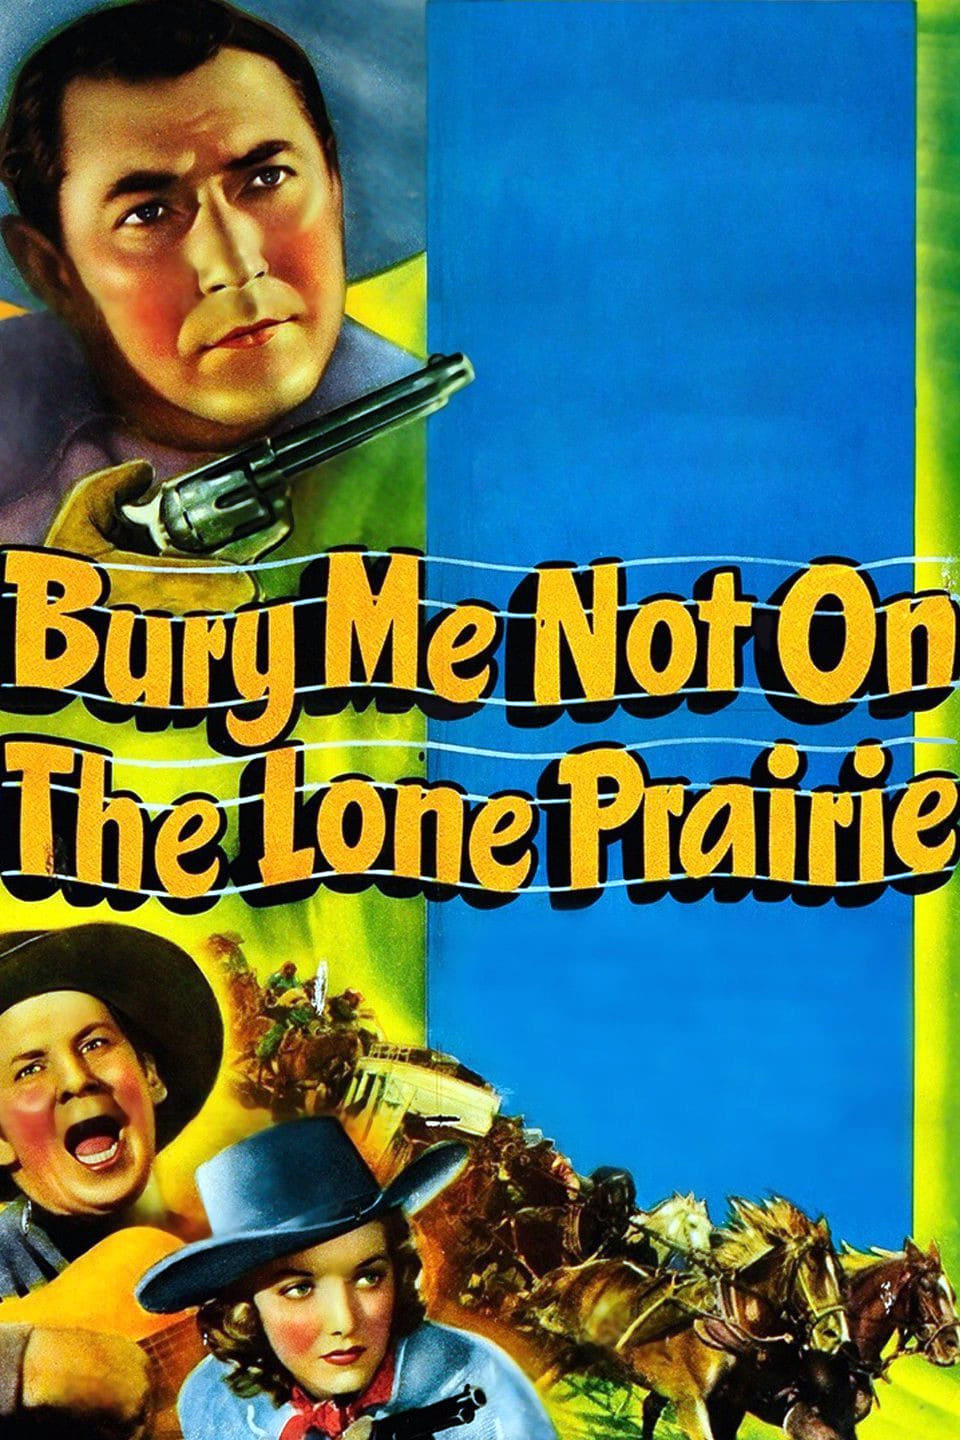 Bury Me Not on the Lone Prairie (1941)